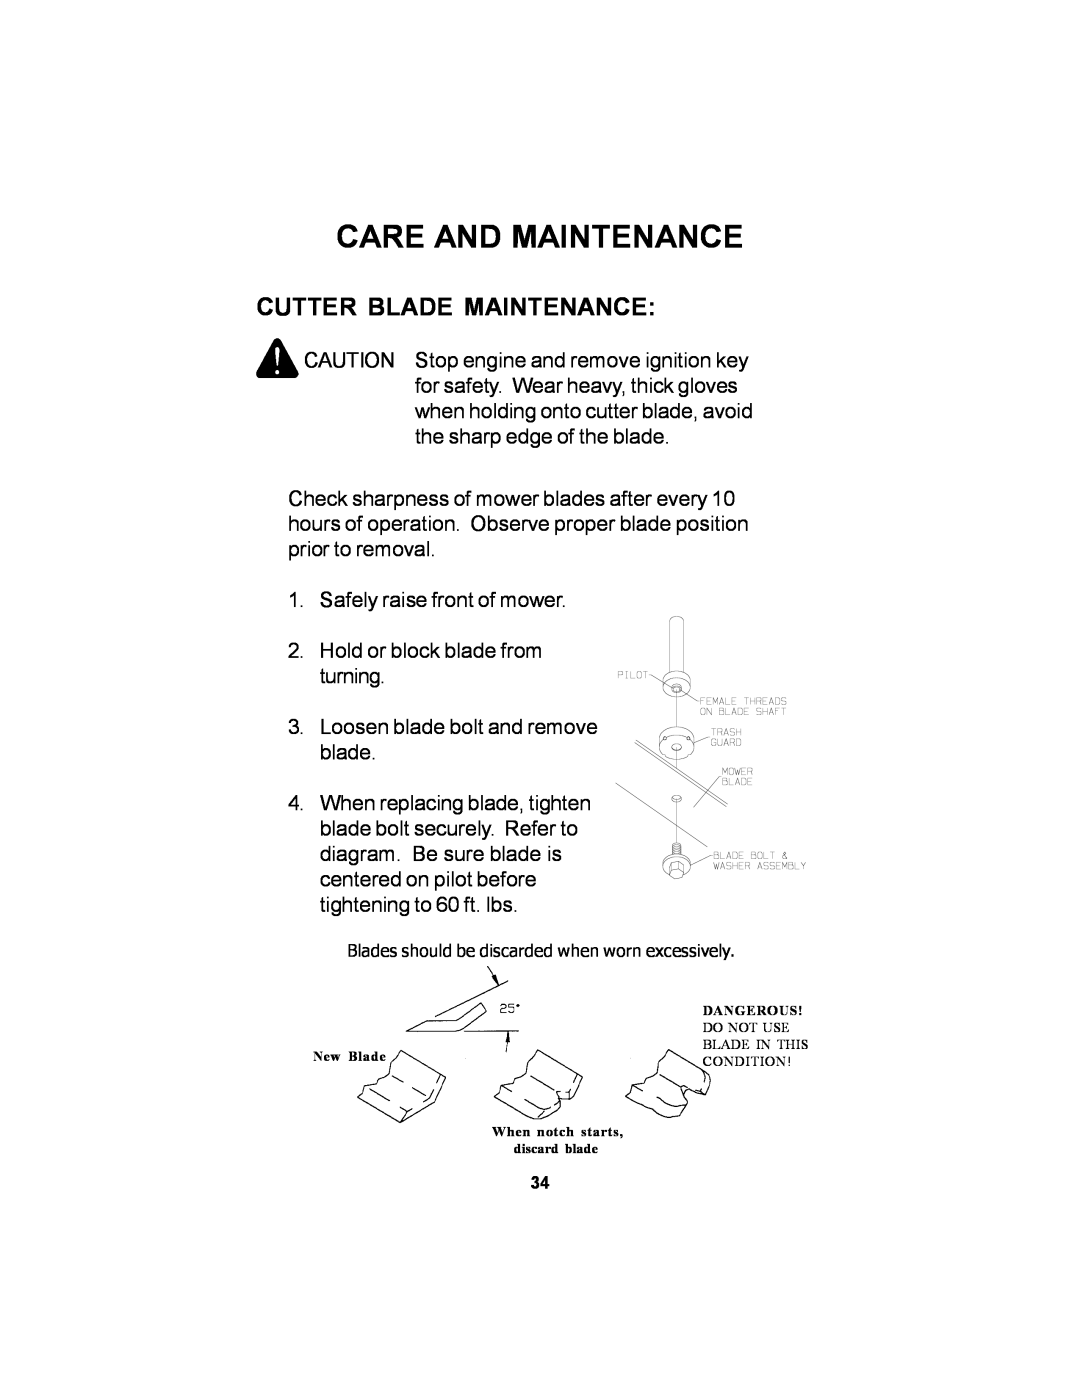 Dixon 18626-106 manual Cutter Blade Maintenance, Care And Maintenance 